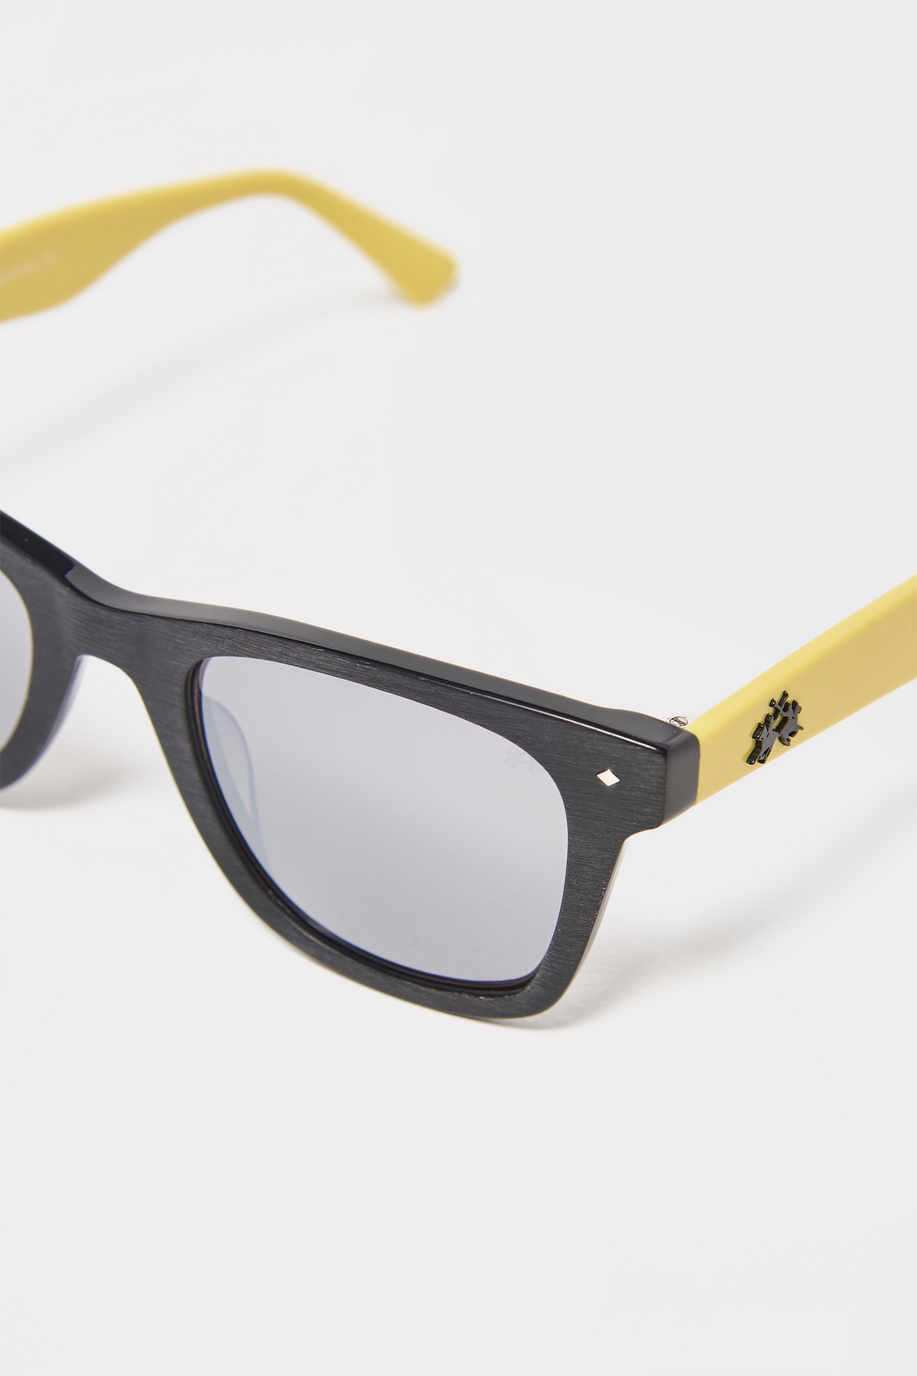 Square model men's sunglasses - Shoes and Accessories | La Martina - Official Online Shop